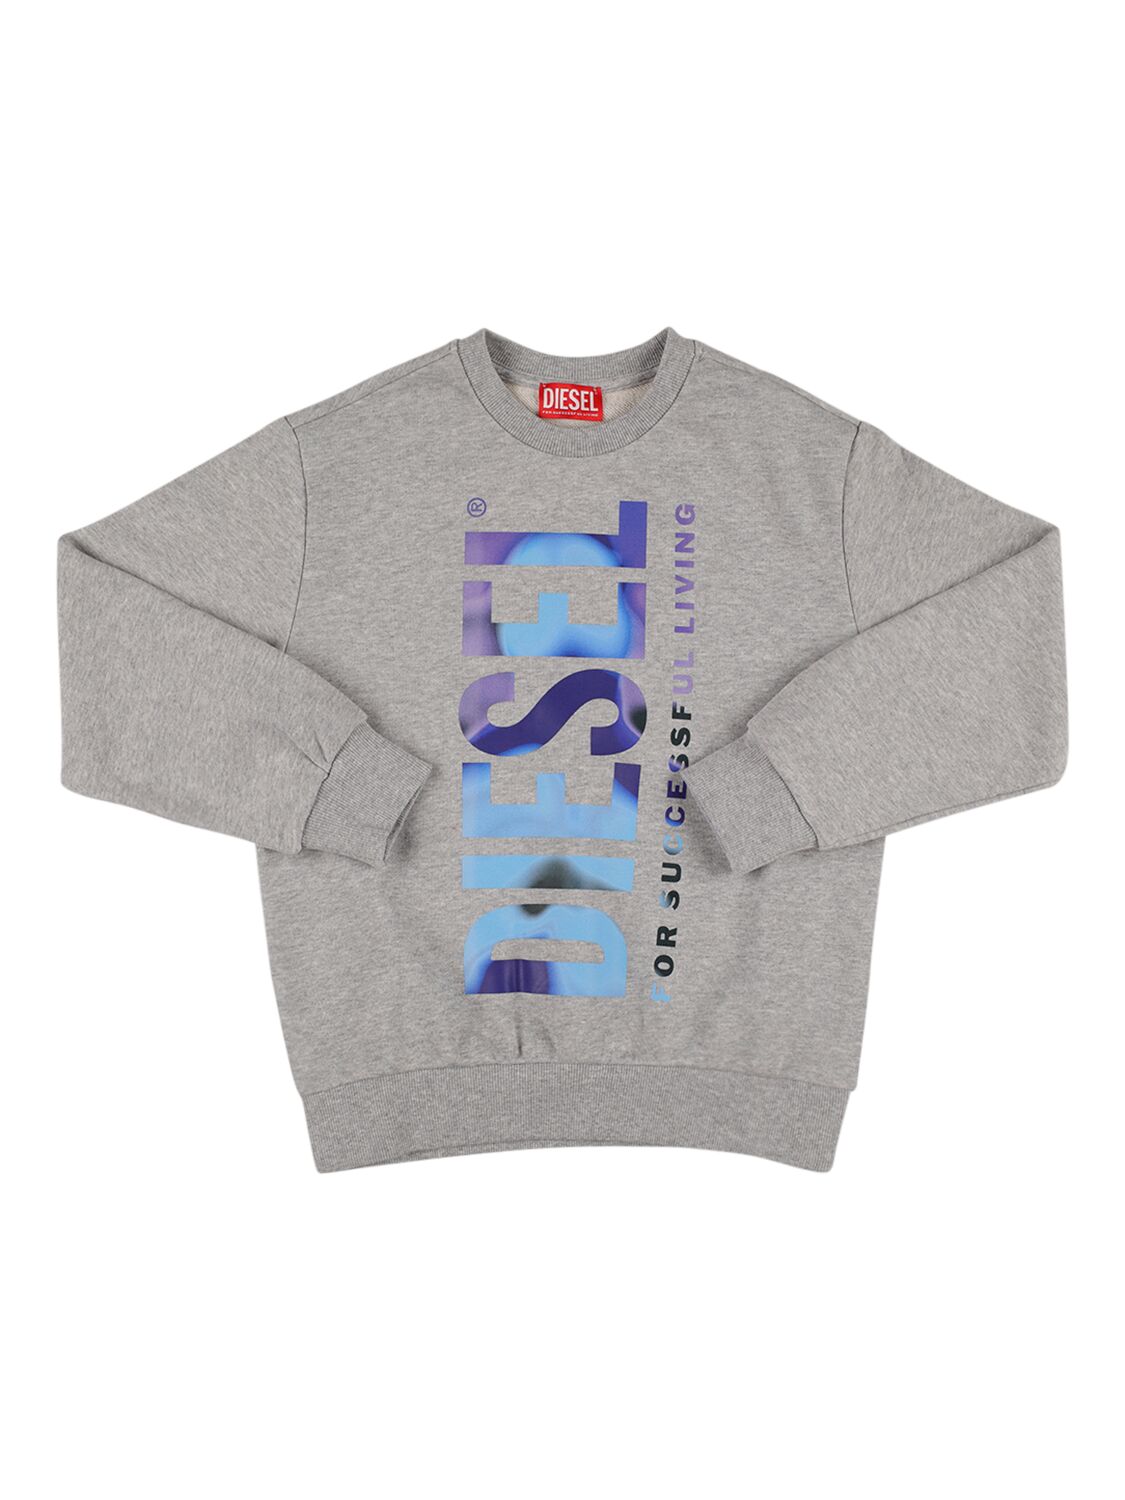 Diesel Kids' Logo Print Cotton Sweatshirt In Grey,multi